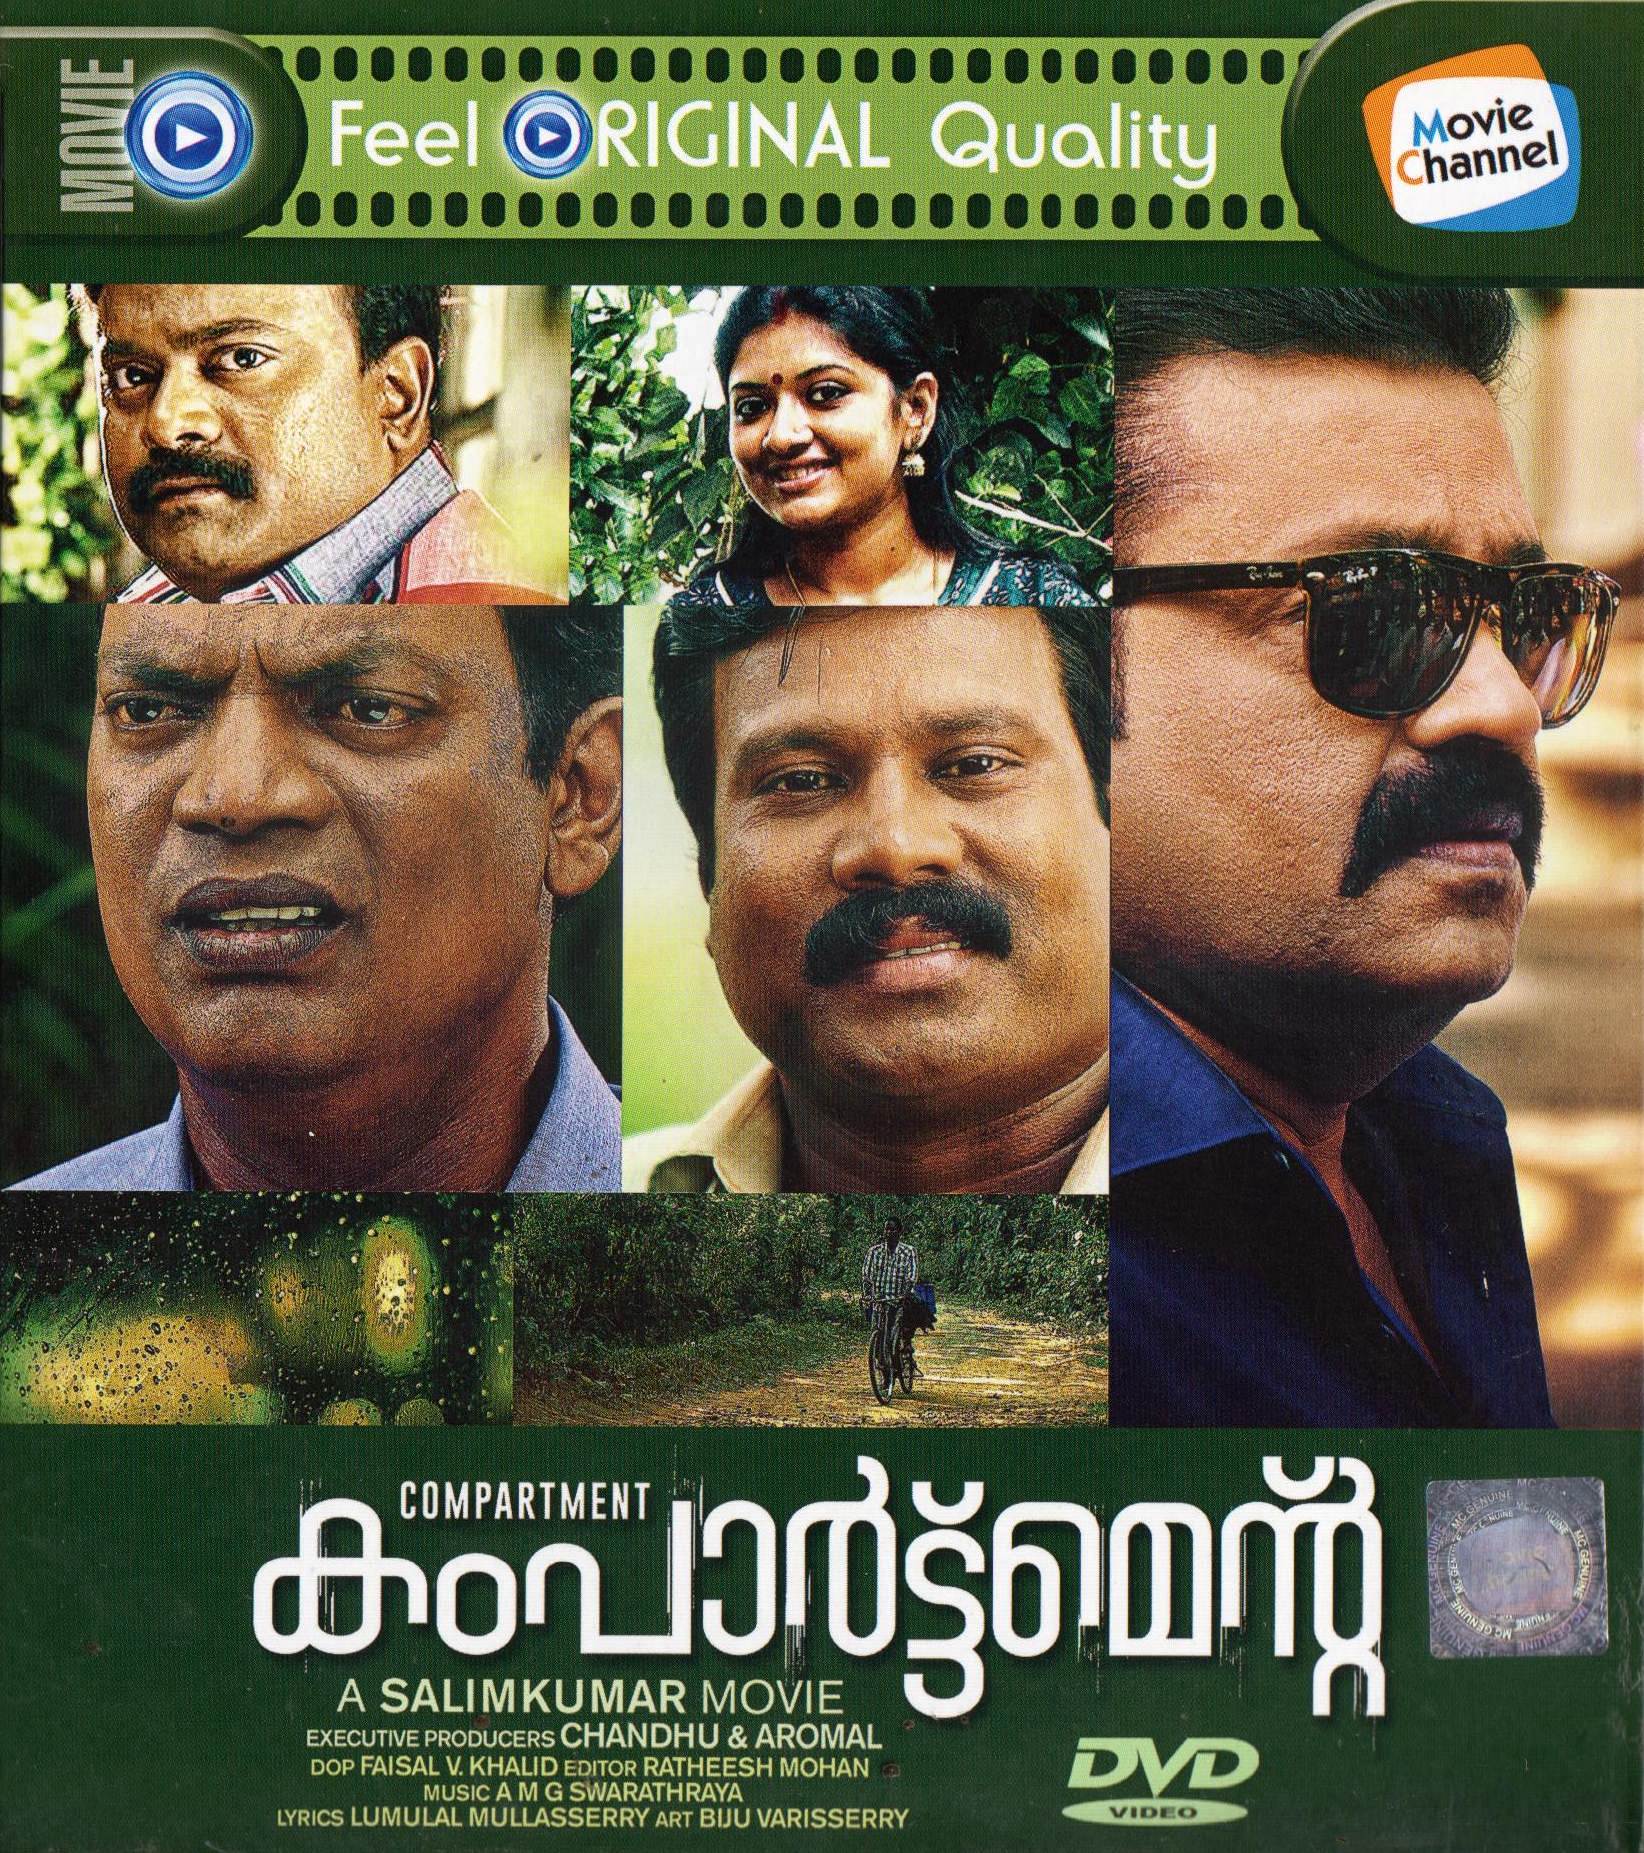 COMPARTMENT Malayalam Movies